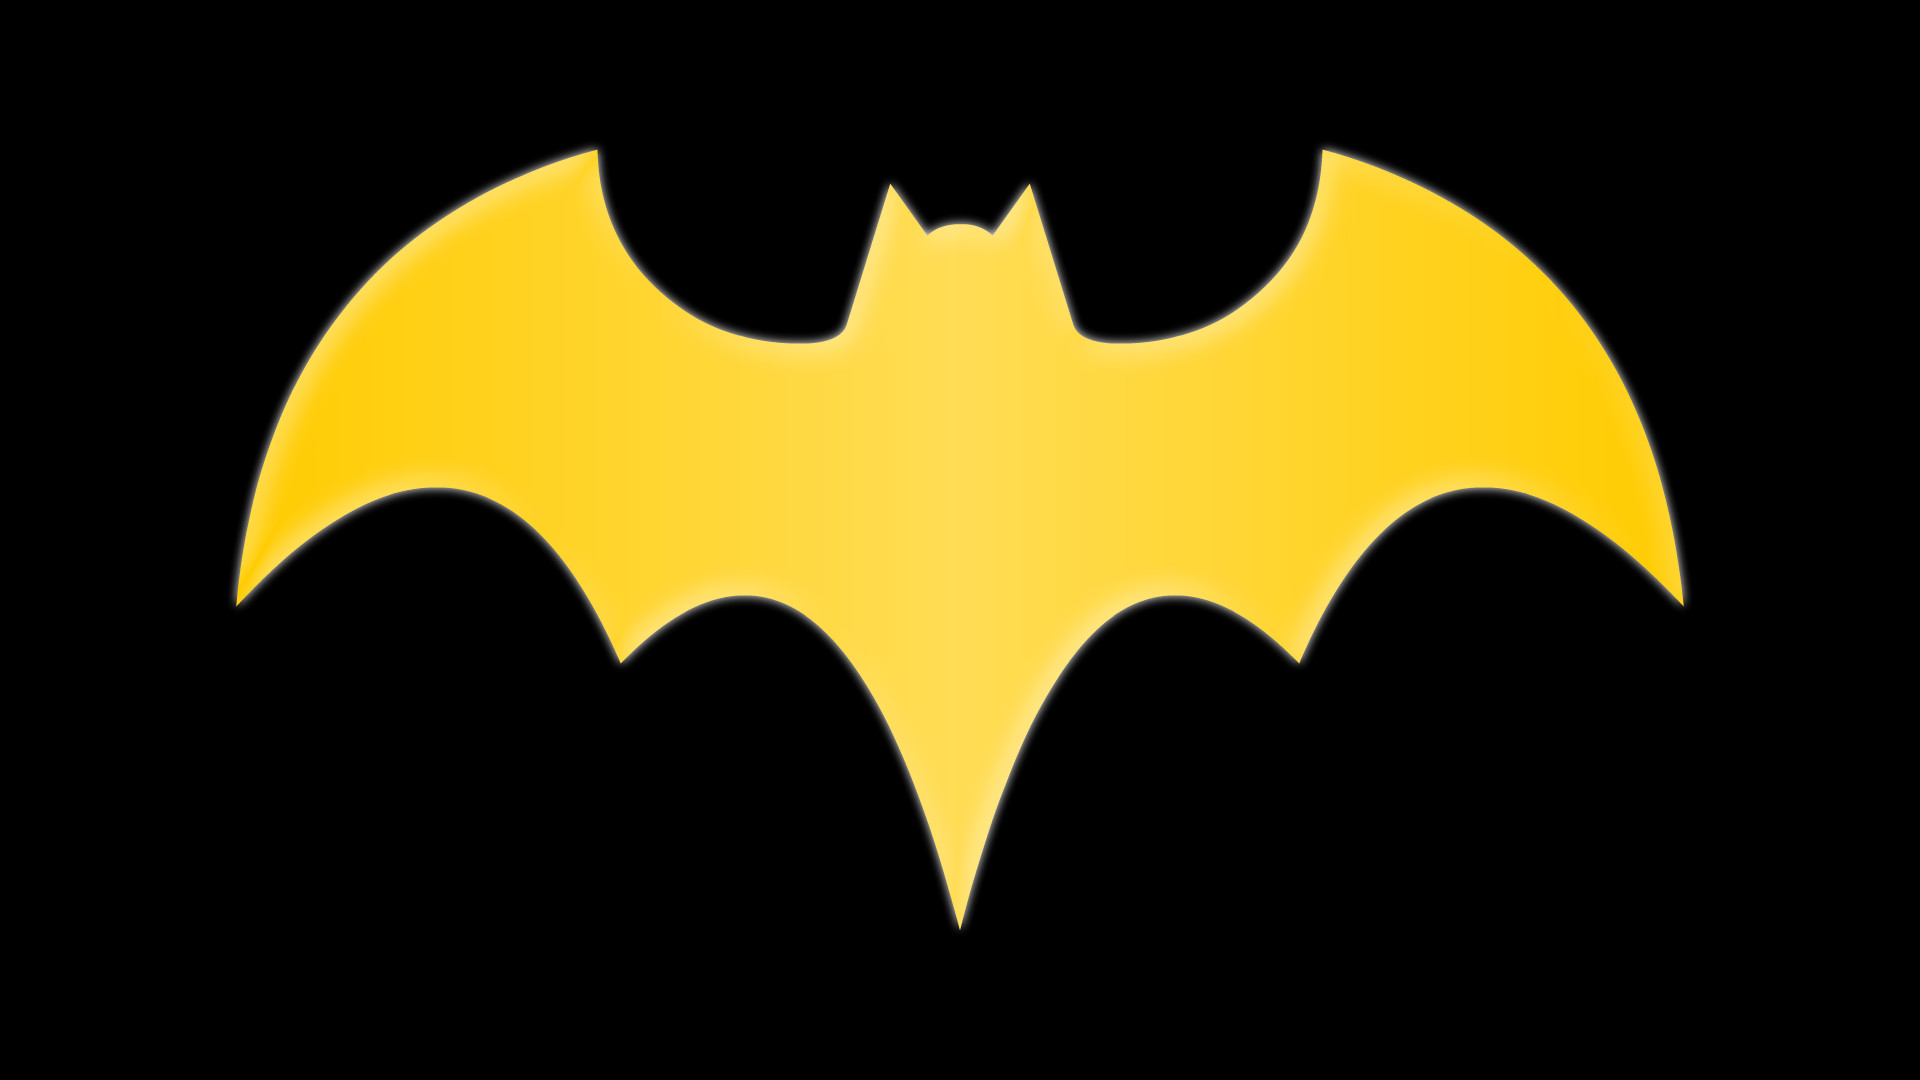 1920x1080 Batgirl Symbol by Yurtigo Batgirl Symbol by Yurtigo